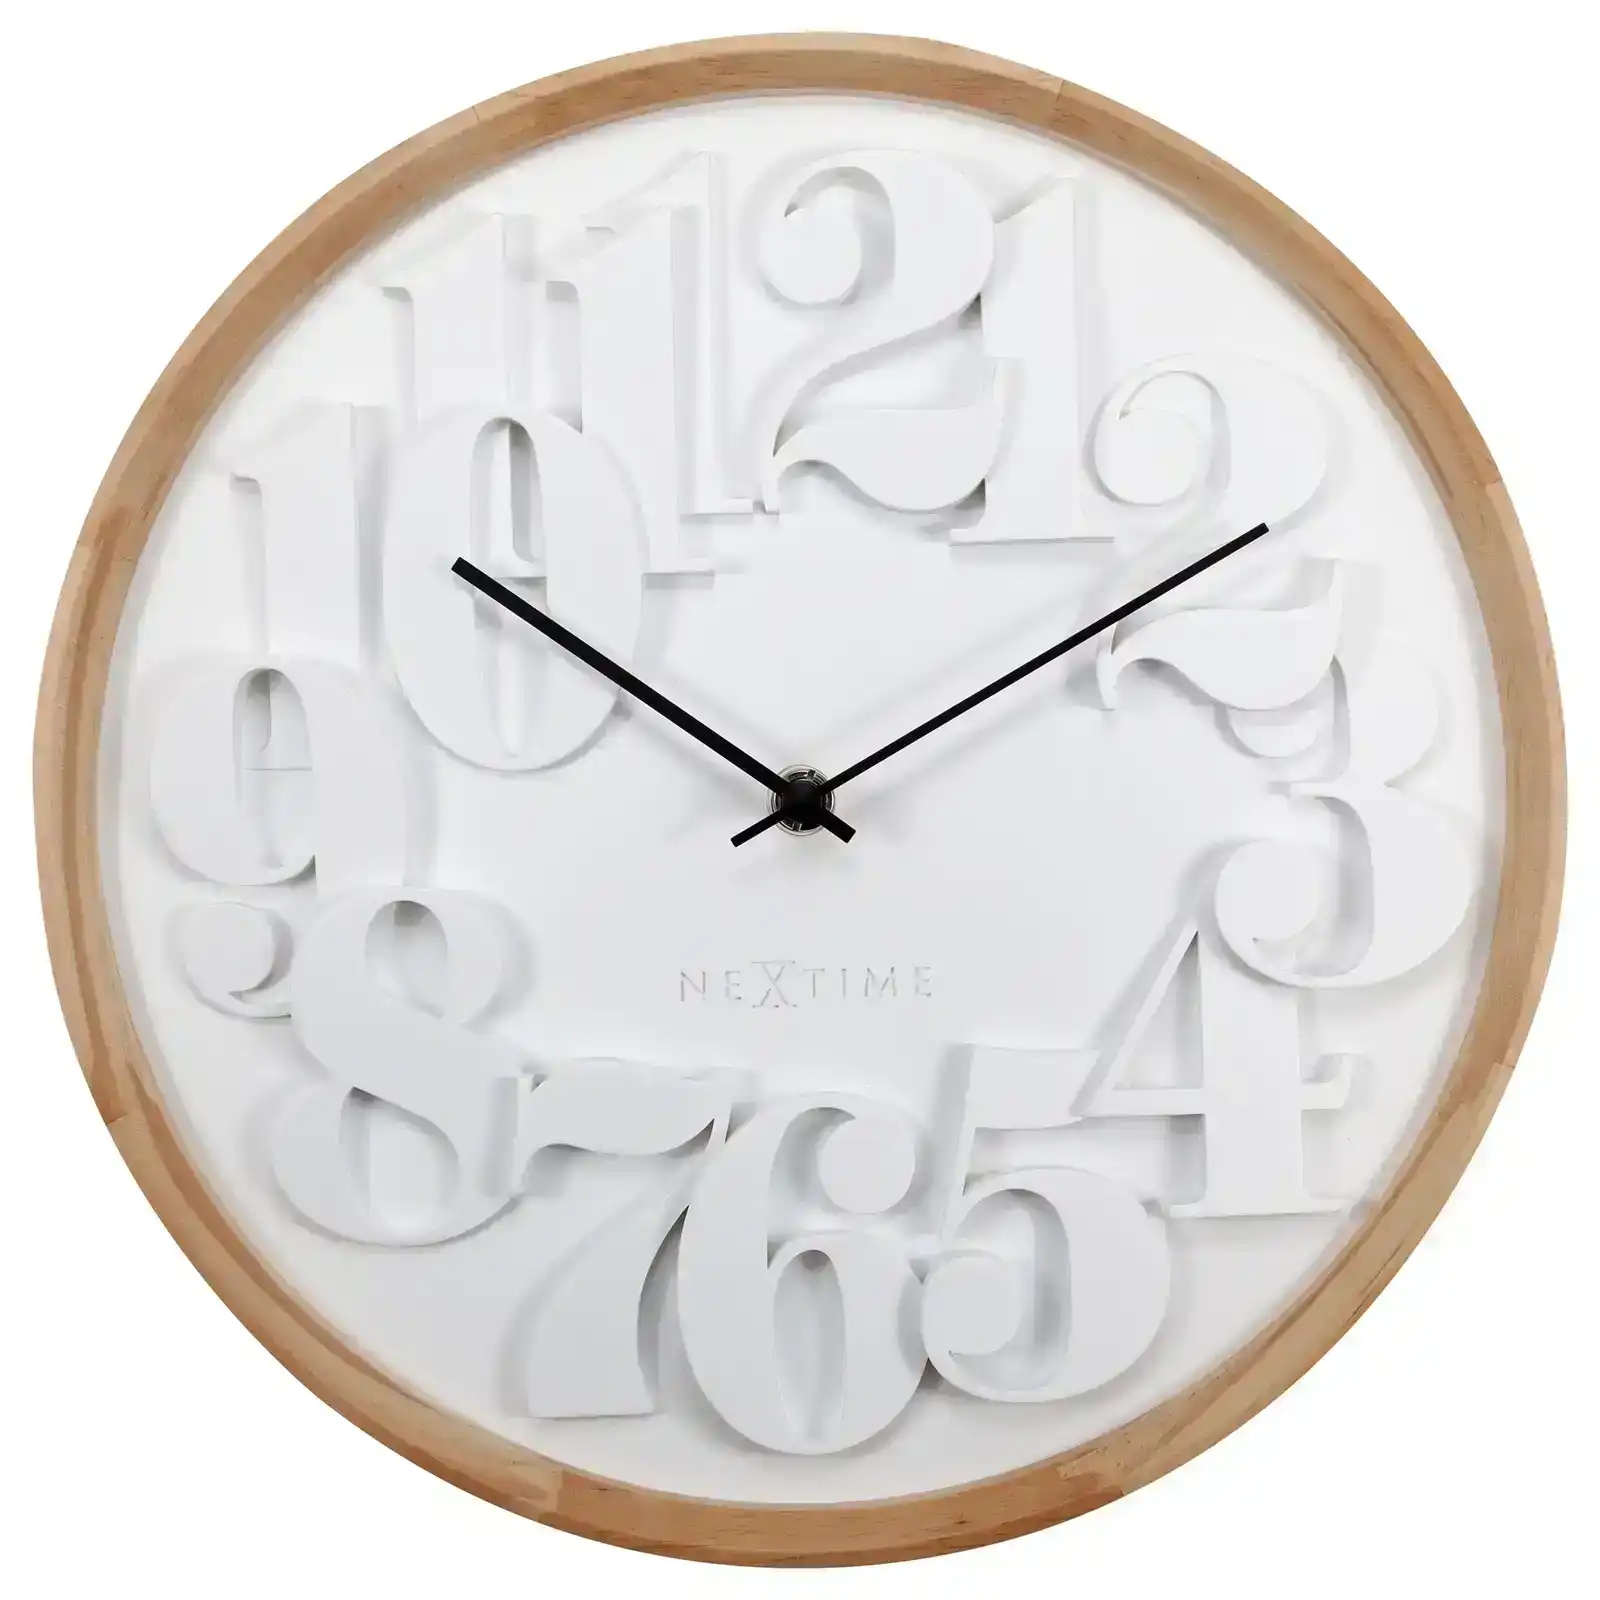 NeXtime Shunkan Japanese Design 28.5cm Wall Clock Hanging Analogue Round White